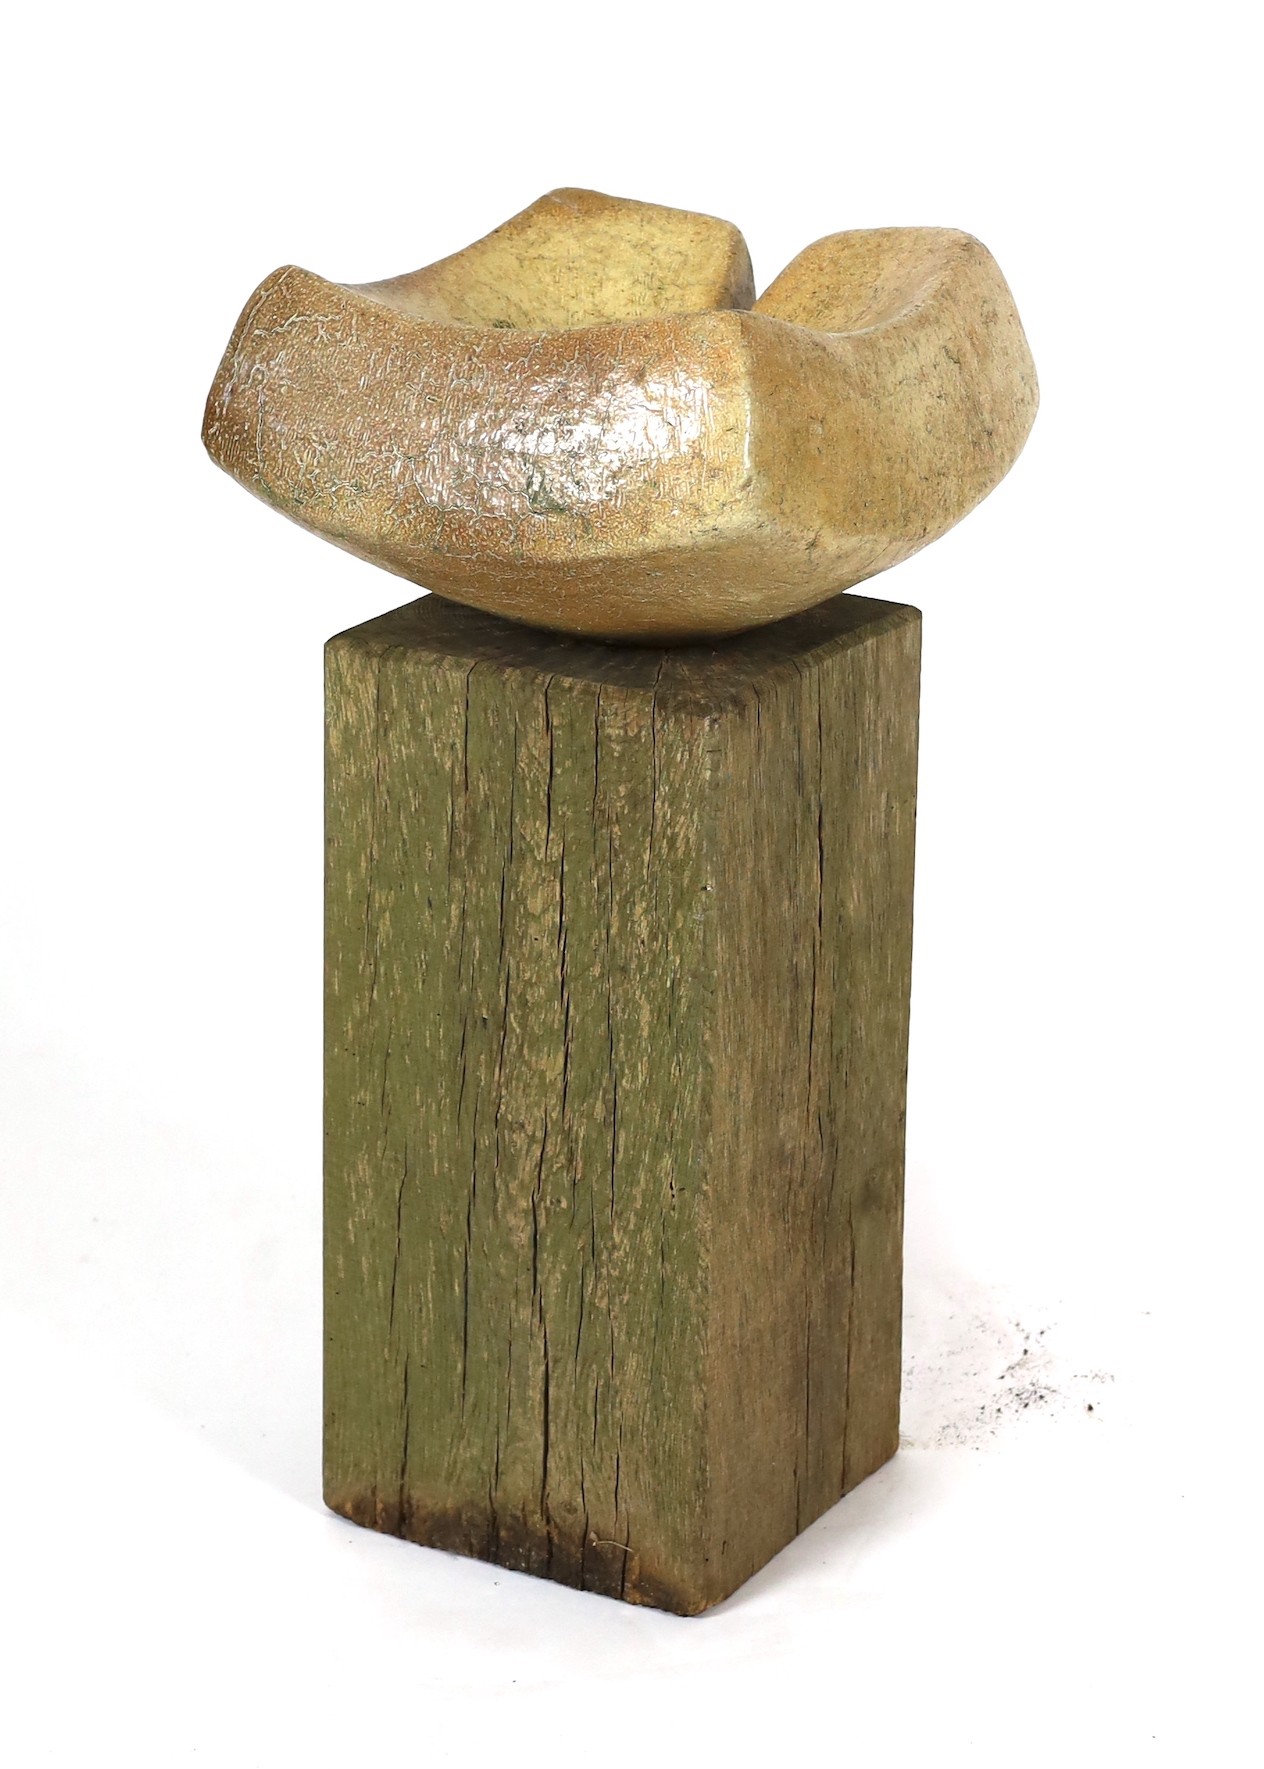 Sarah Walton (b.1945), a large salt glaze stoneware bird bath on a wood pedestal, total dimensions 42cm wide 82cm high